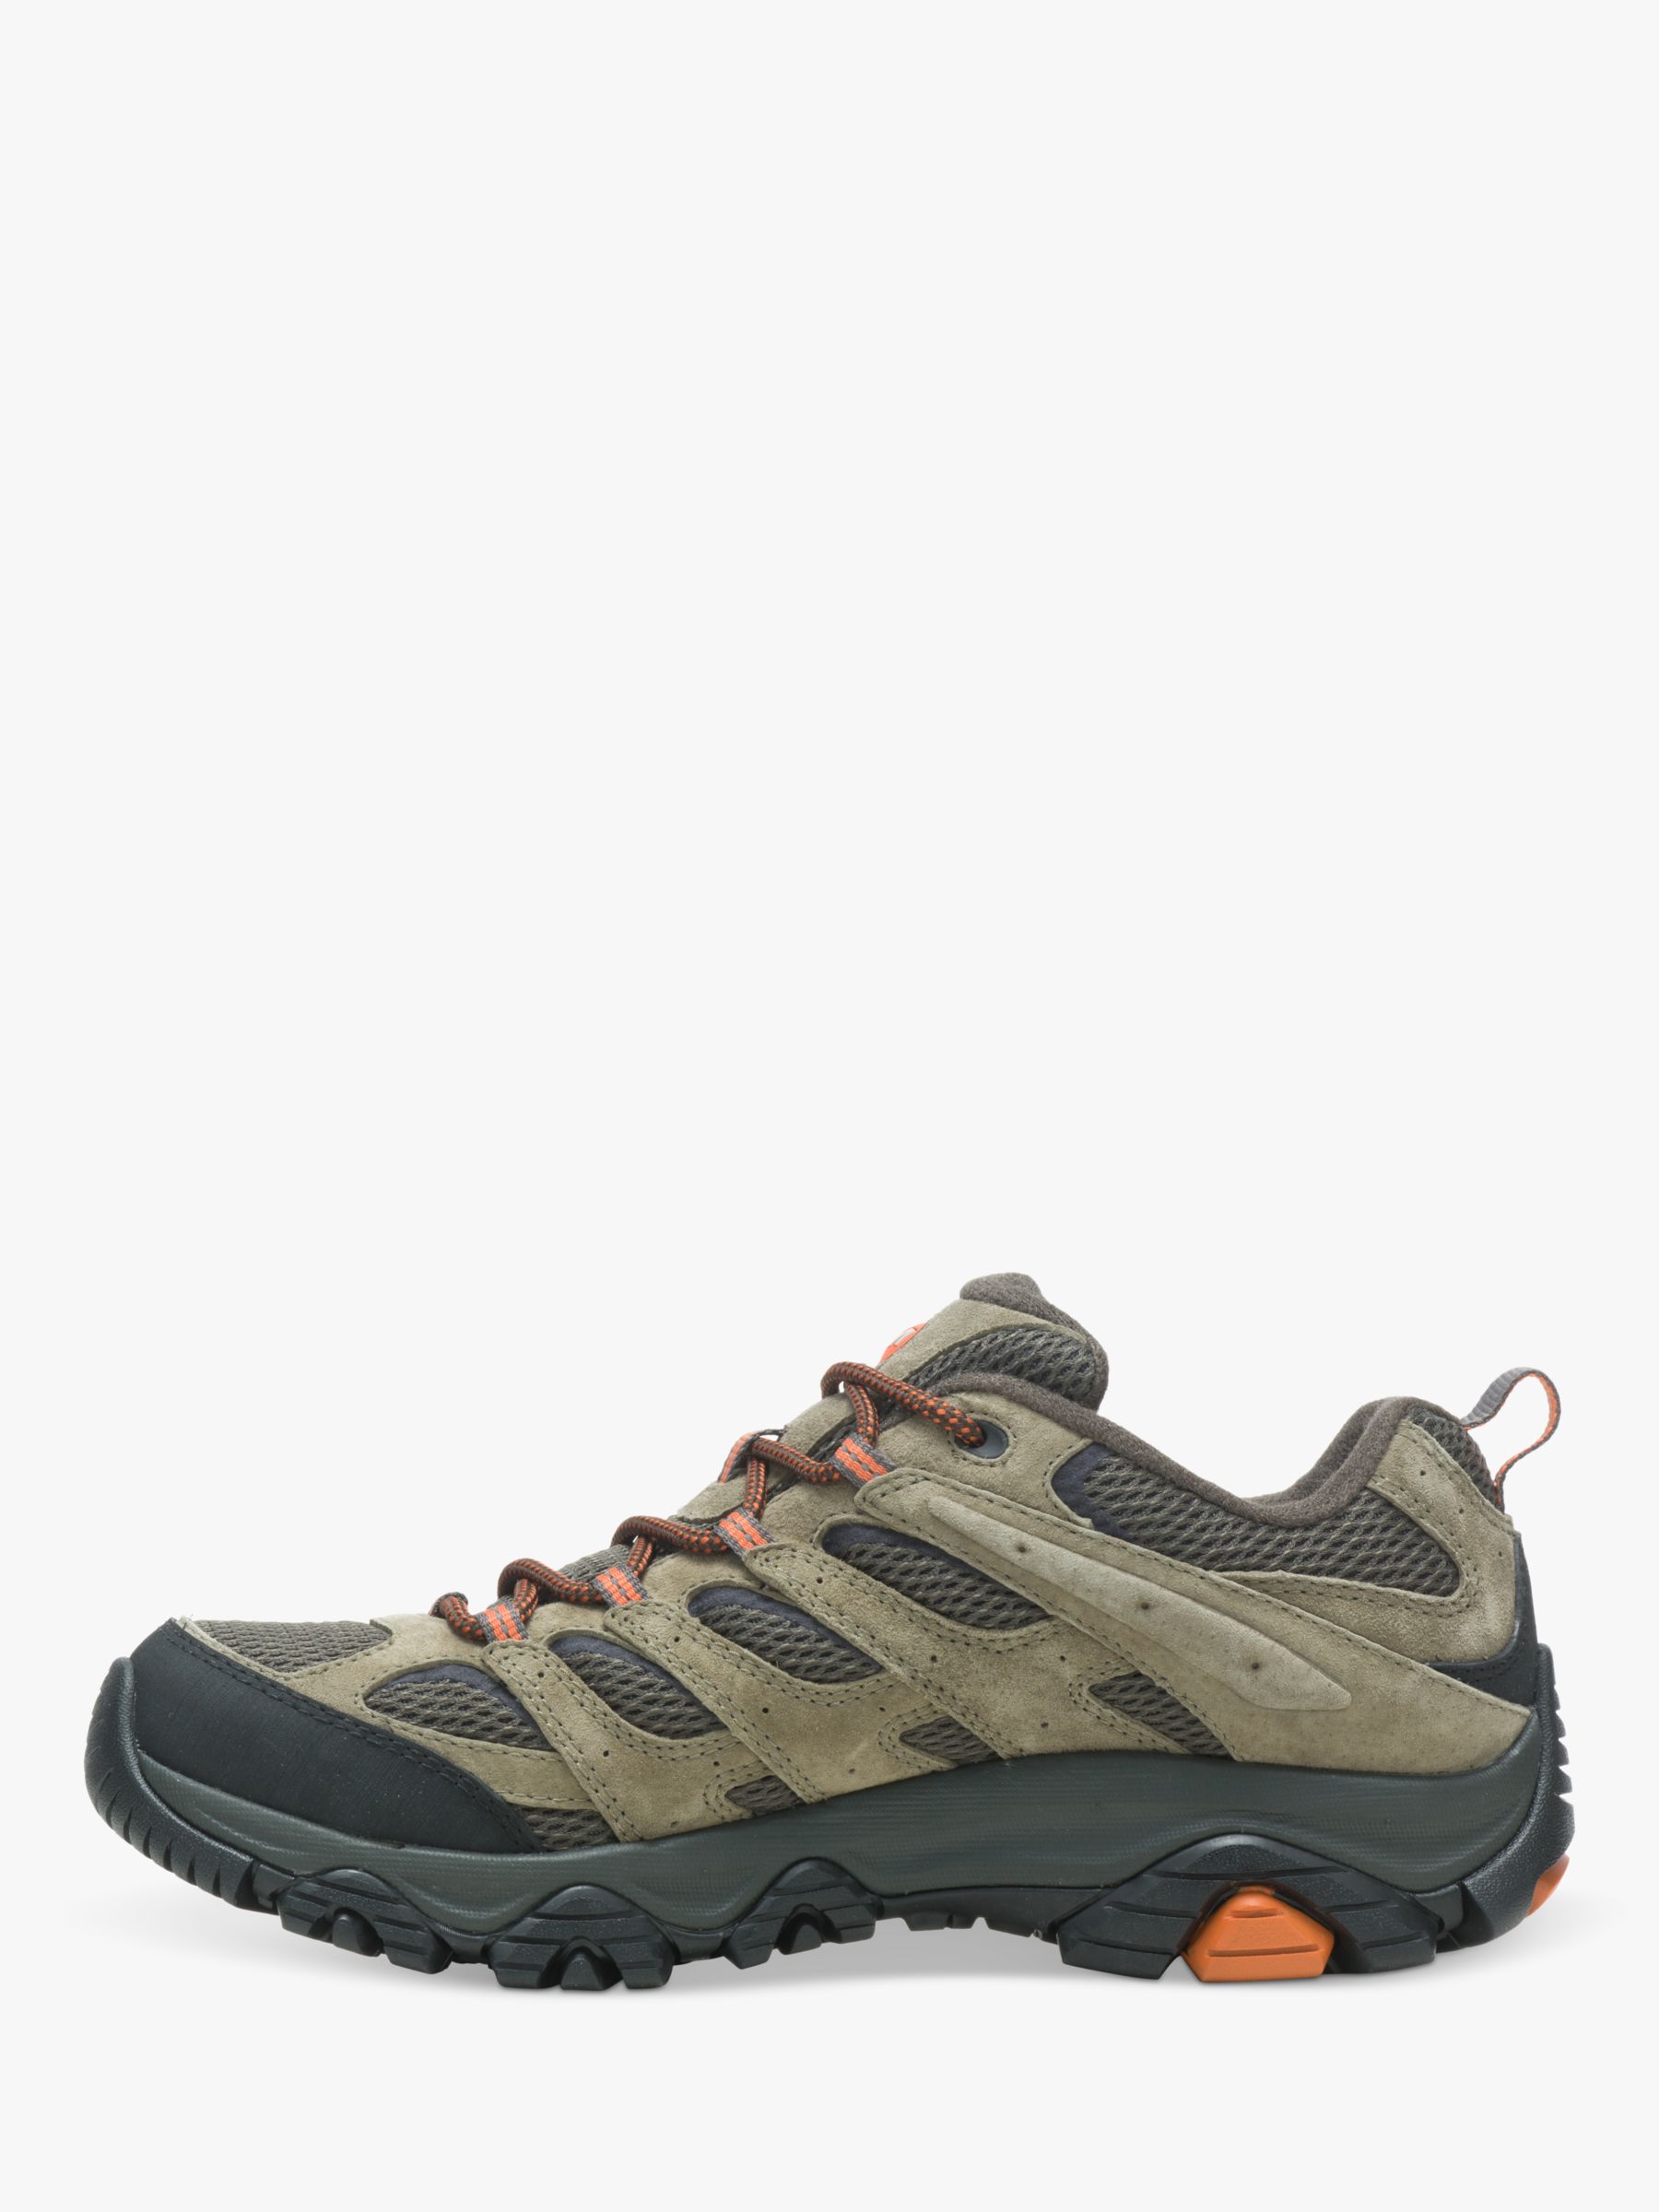 Merrell Moab 3 Men's Gore-Tex Waterproof Hiking Shoes, Olive, 7